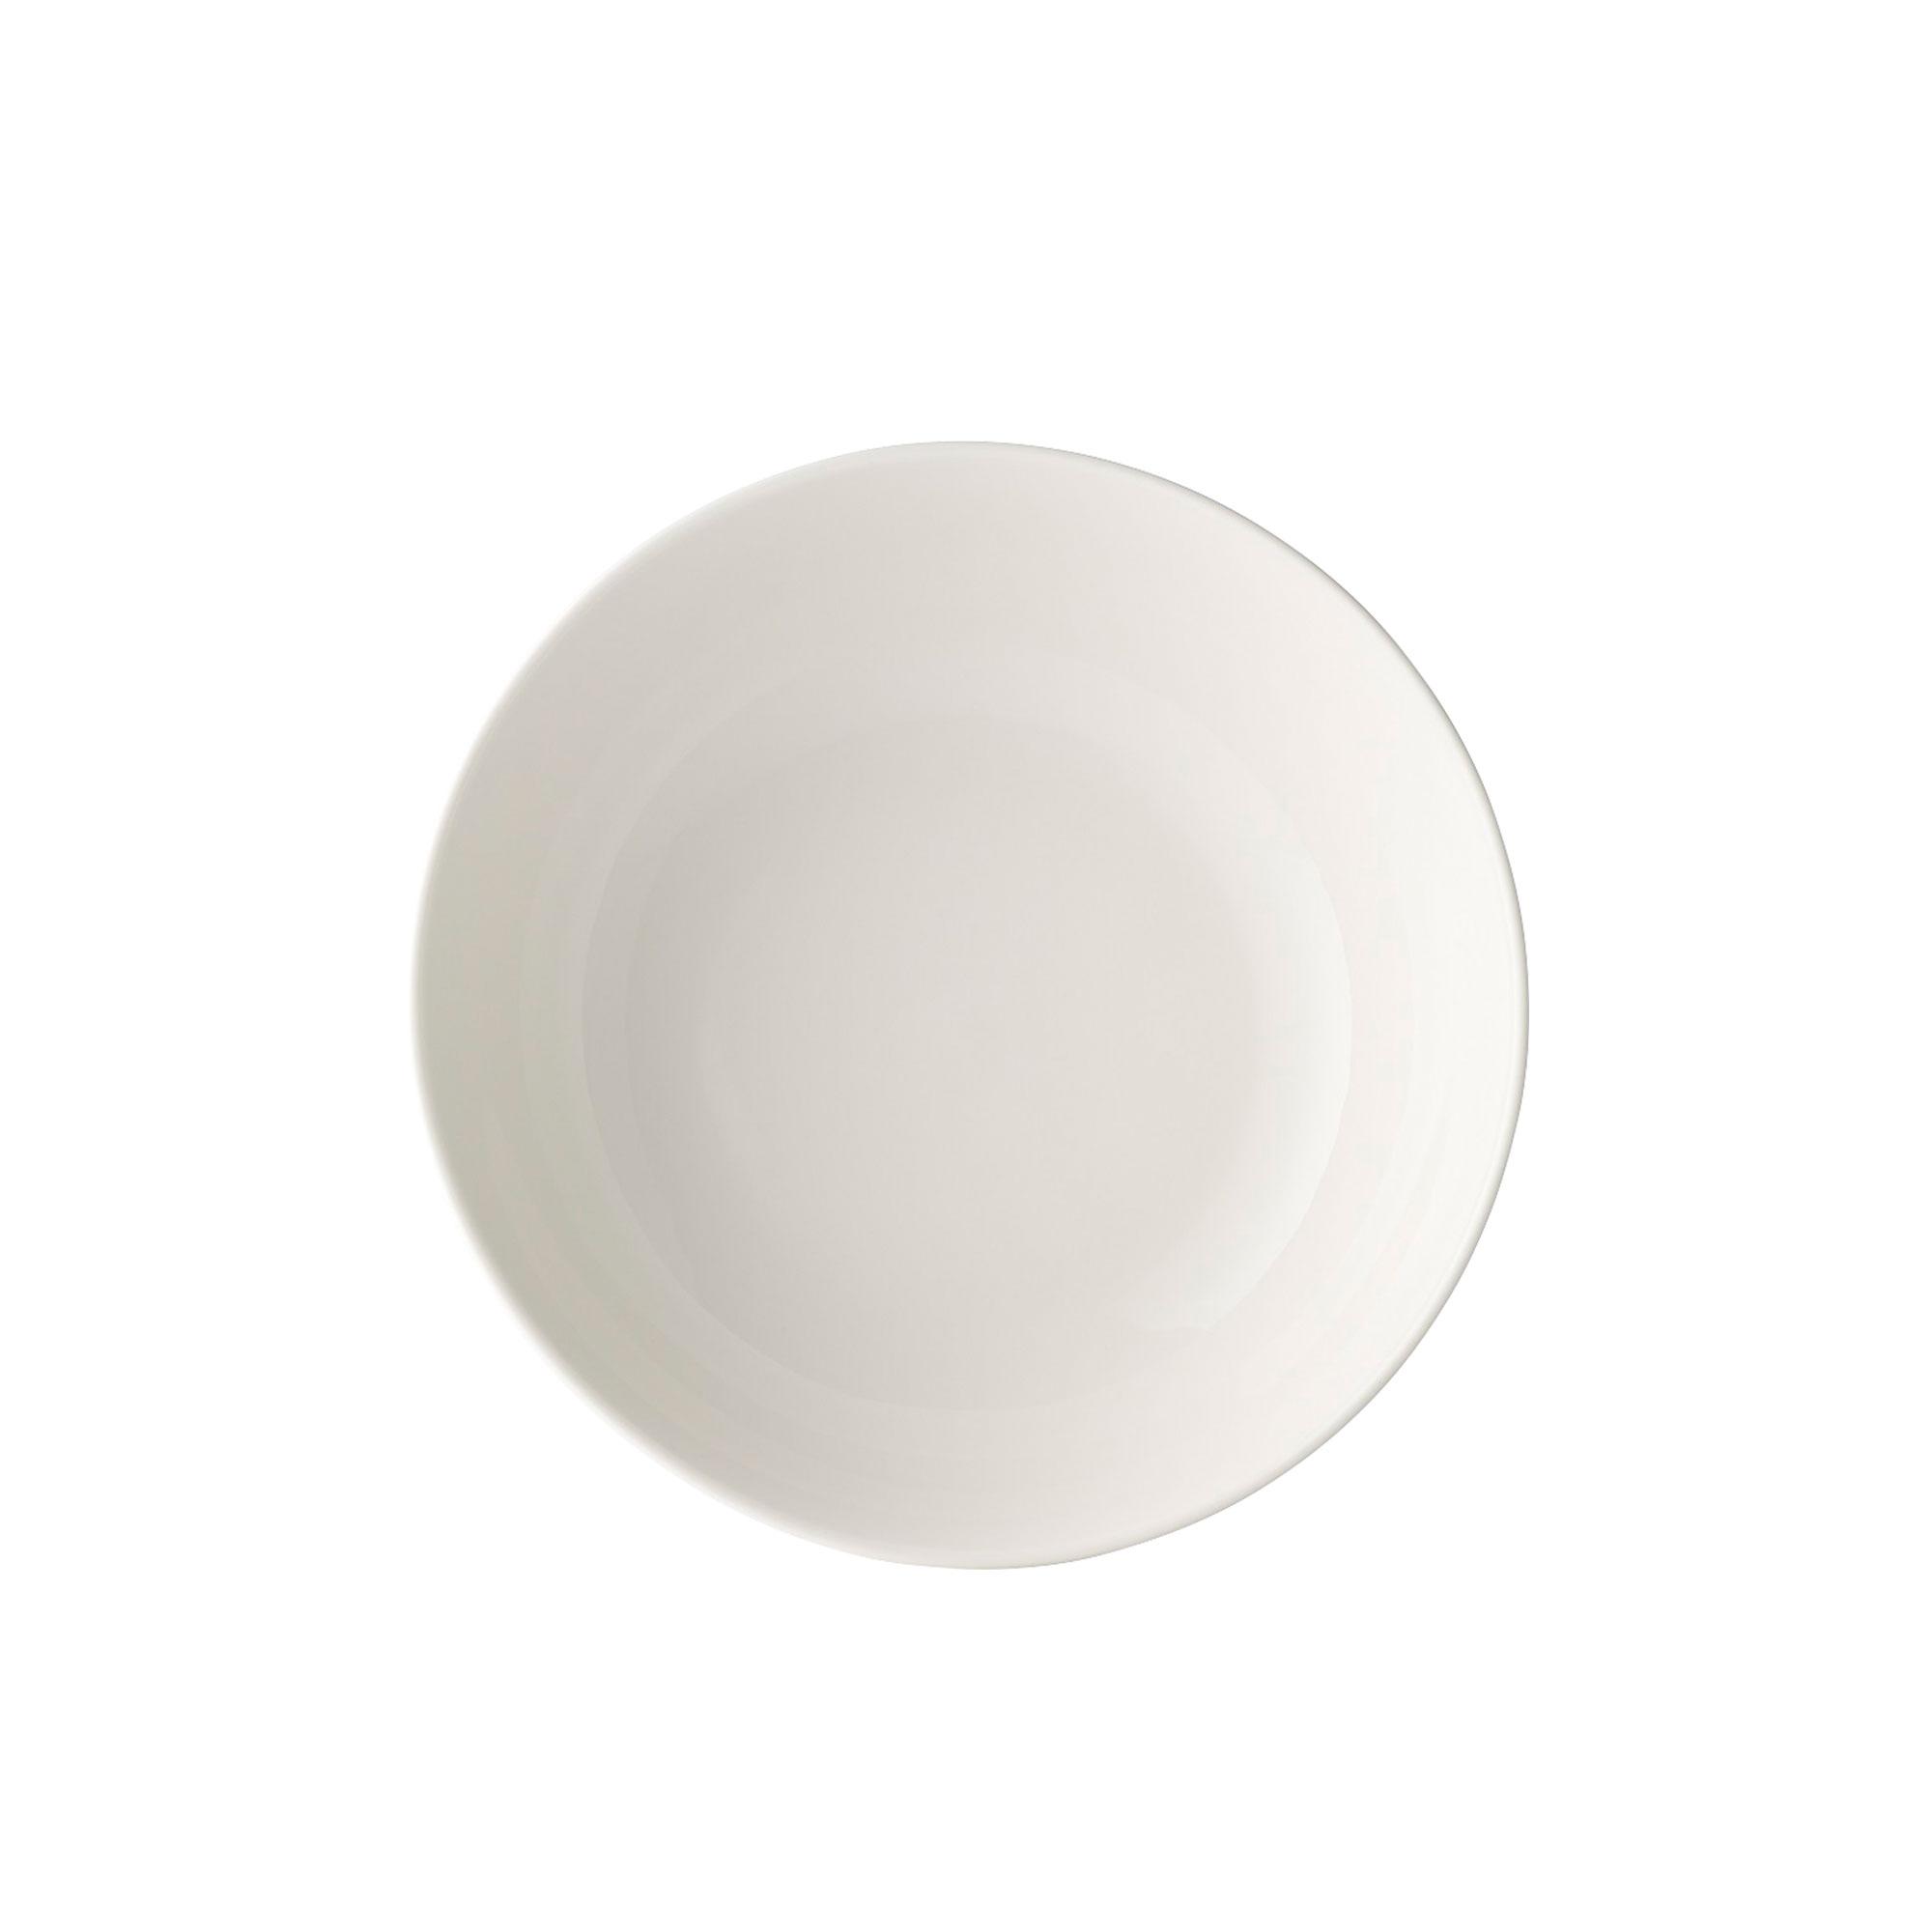 Noritake Everyday by Adam Liaw Soup Bowl Set of 4 White Image 5